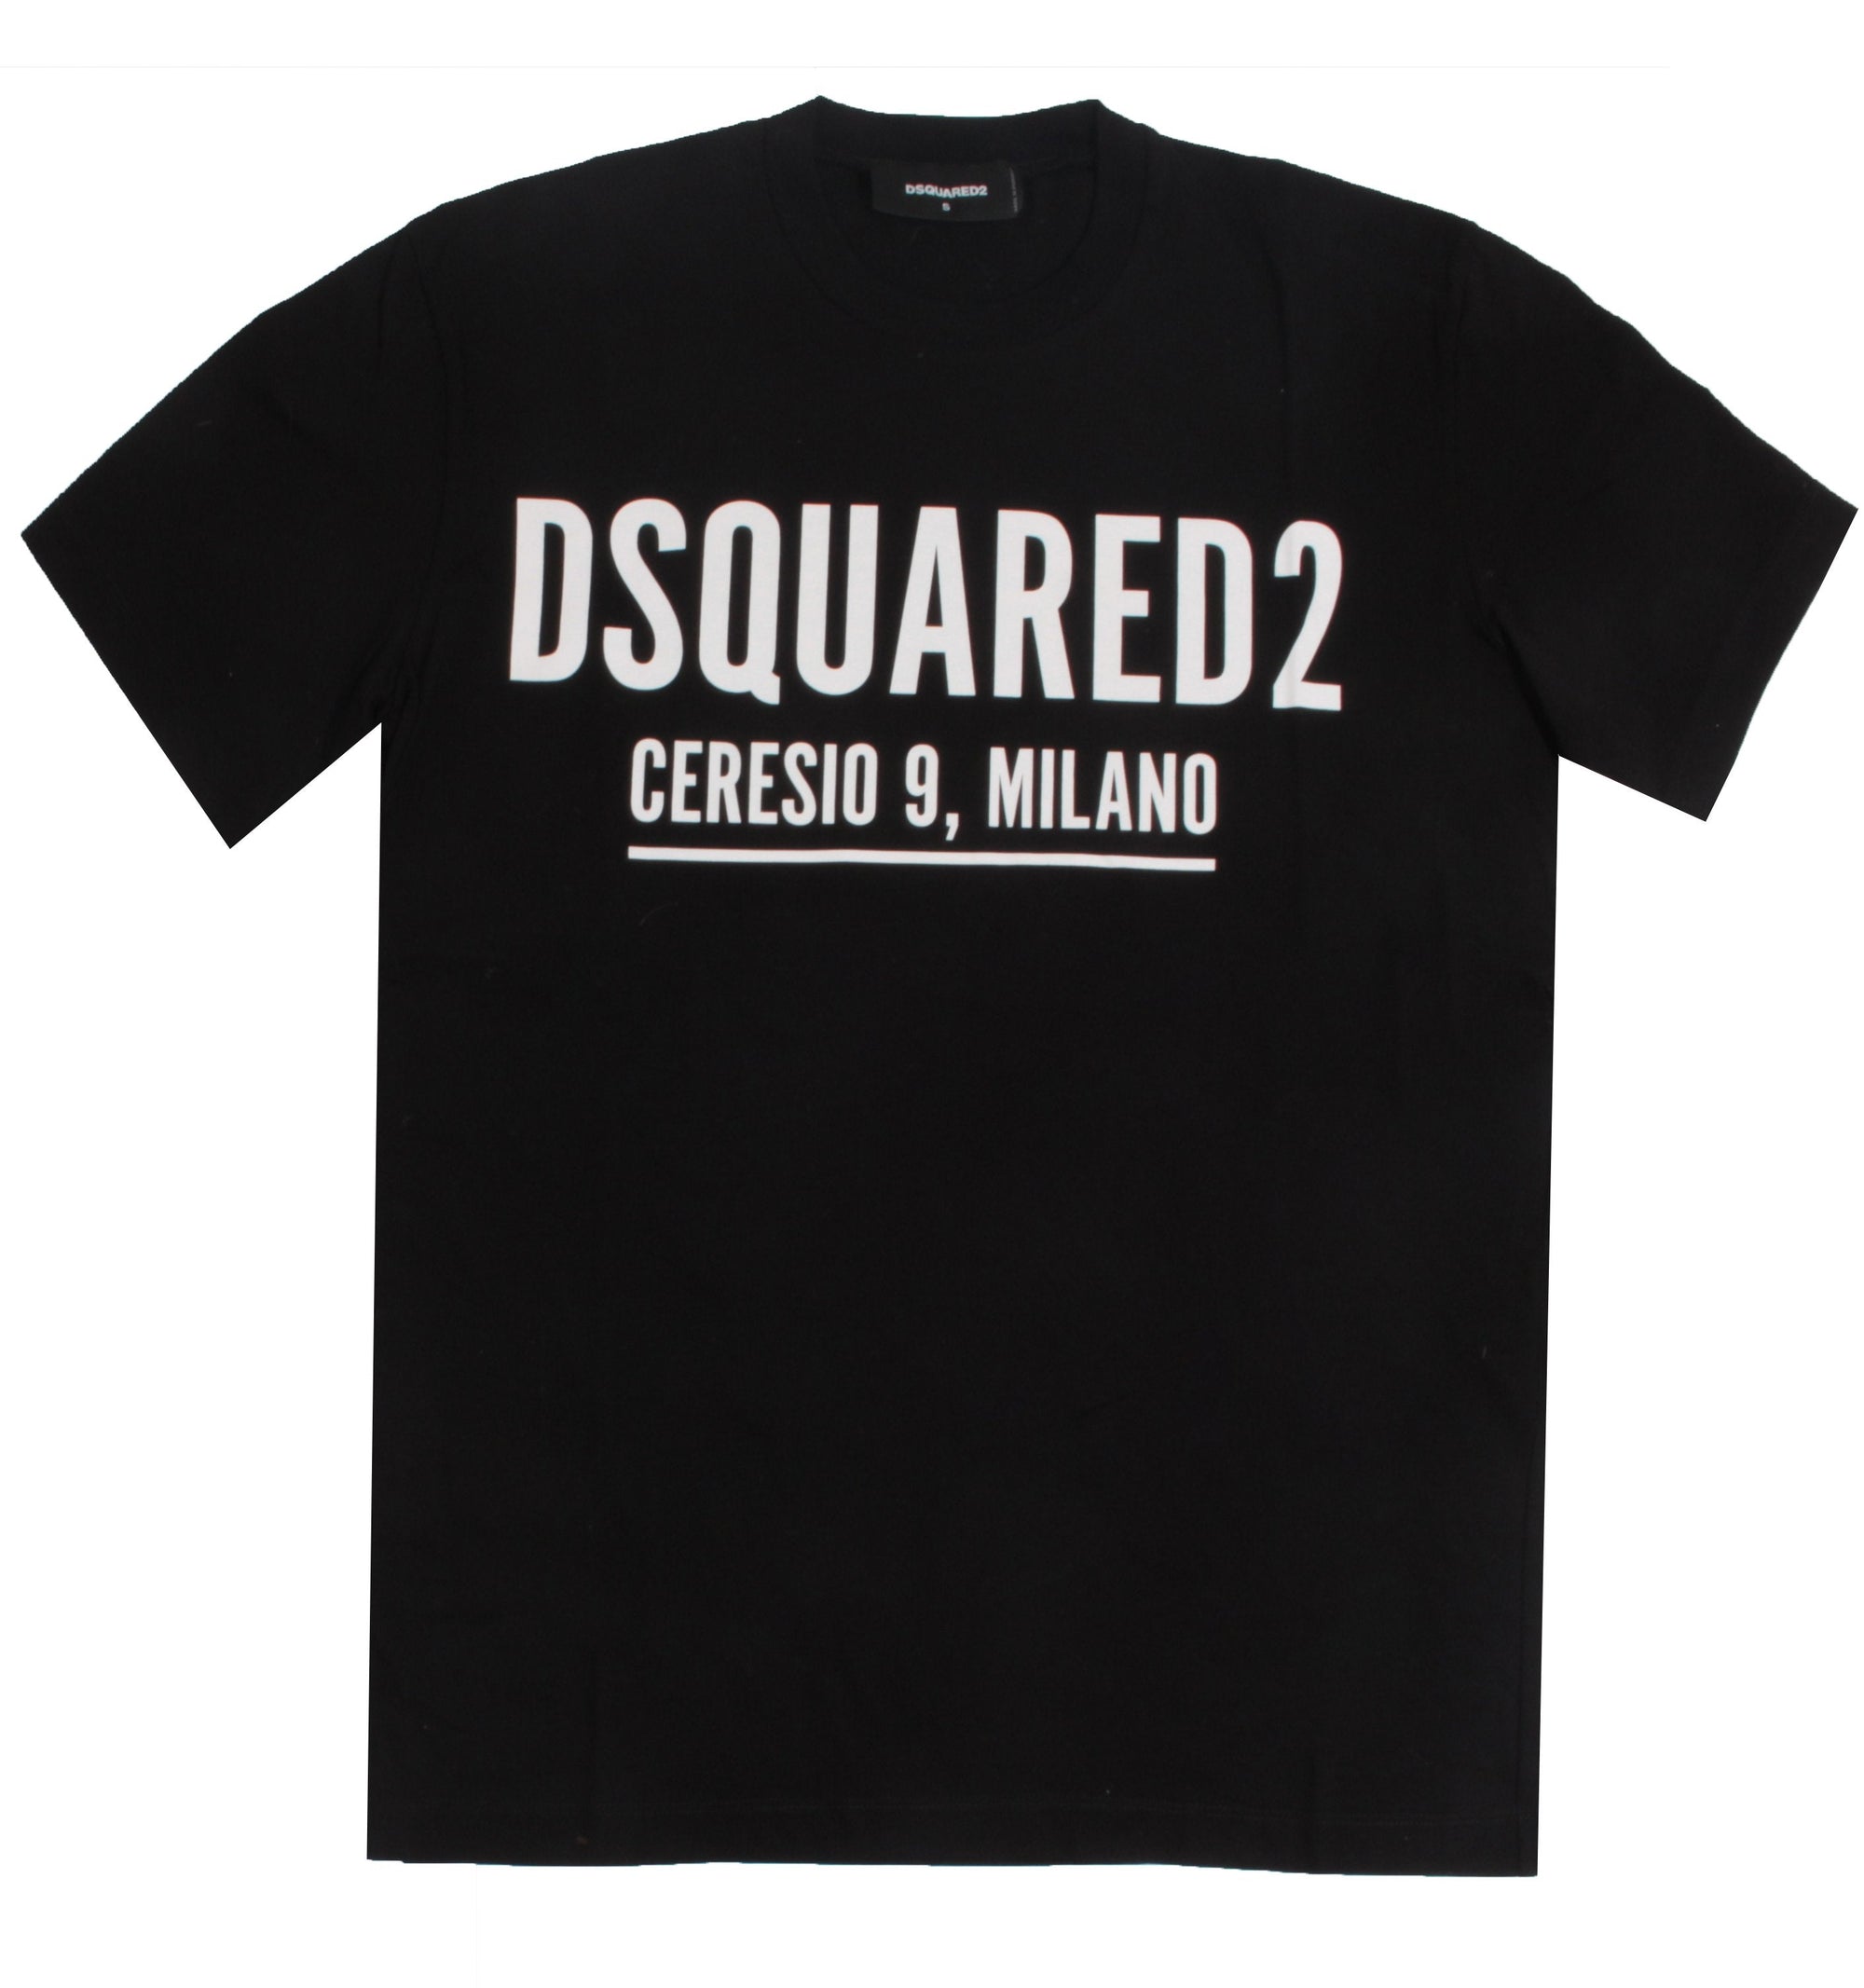 Ceresio 9, Milano Graphic Tee - Black